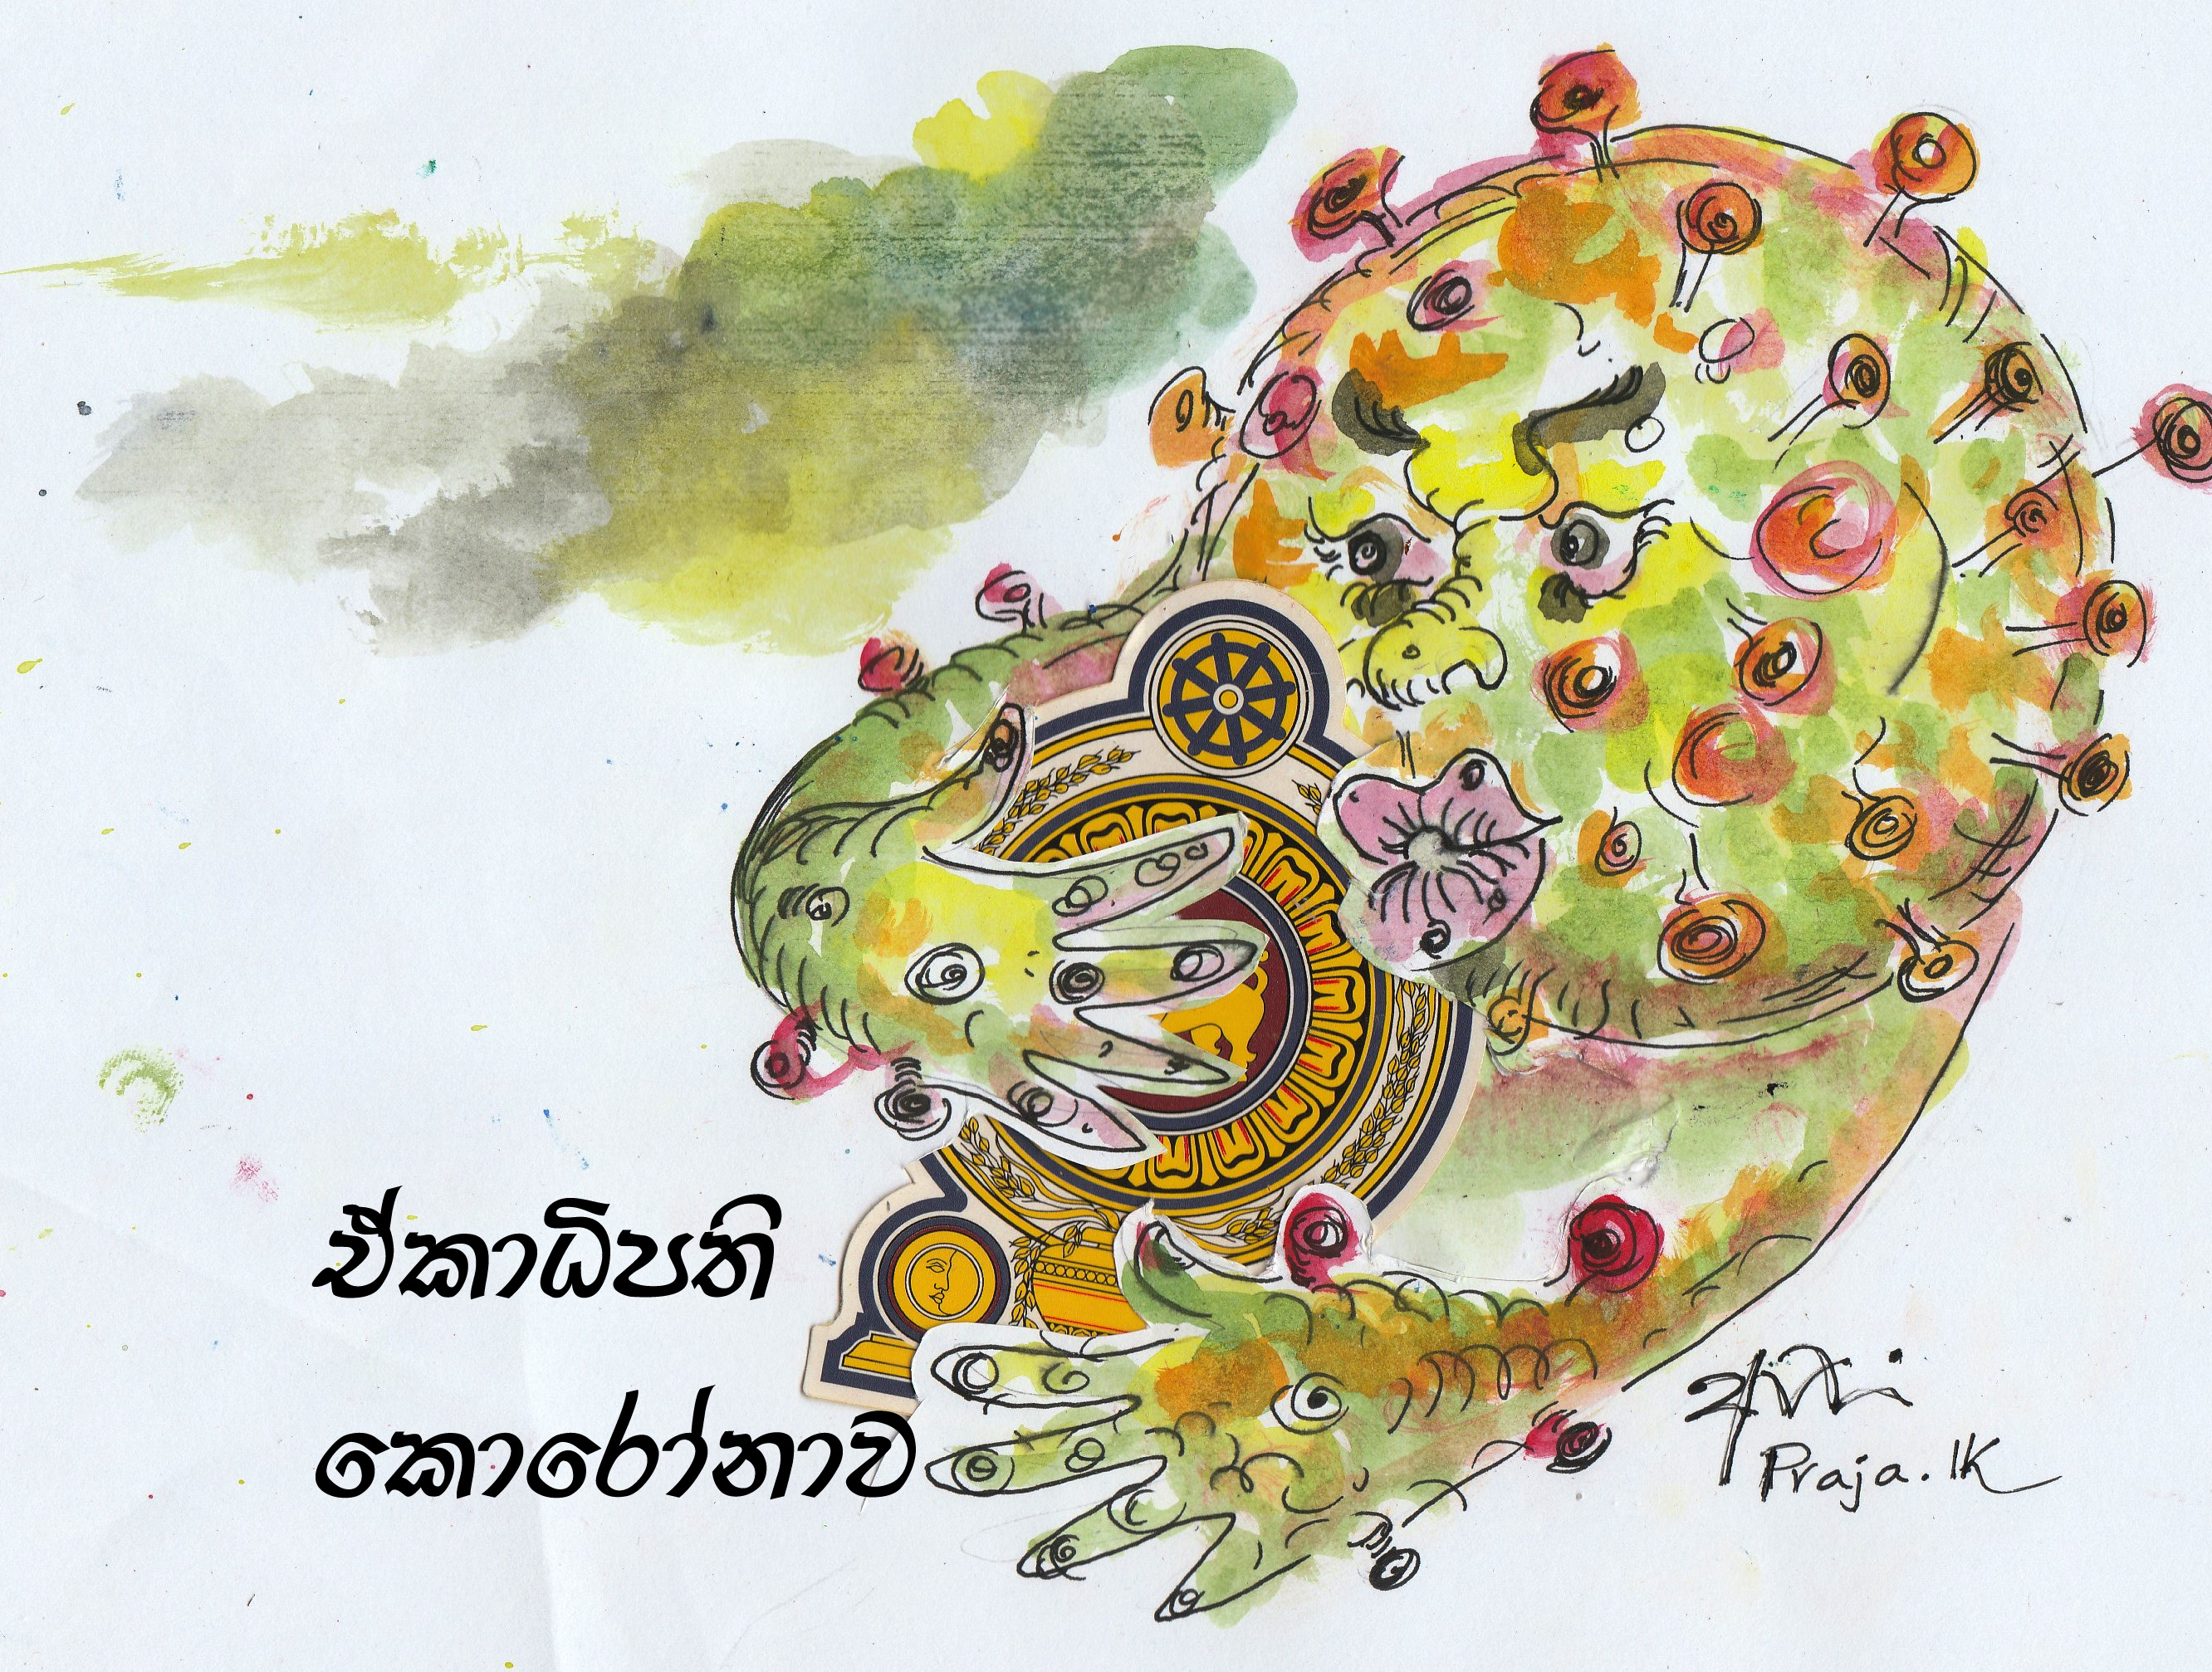 Dictator Corona - cartoon by Ajith Perakum Jayasinghe